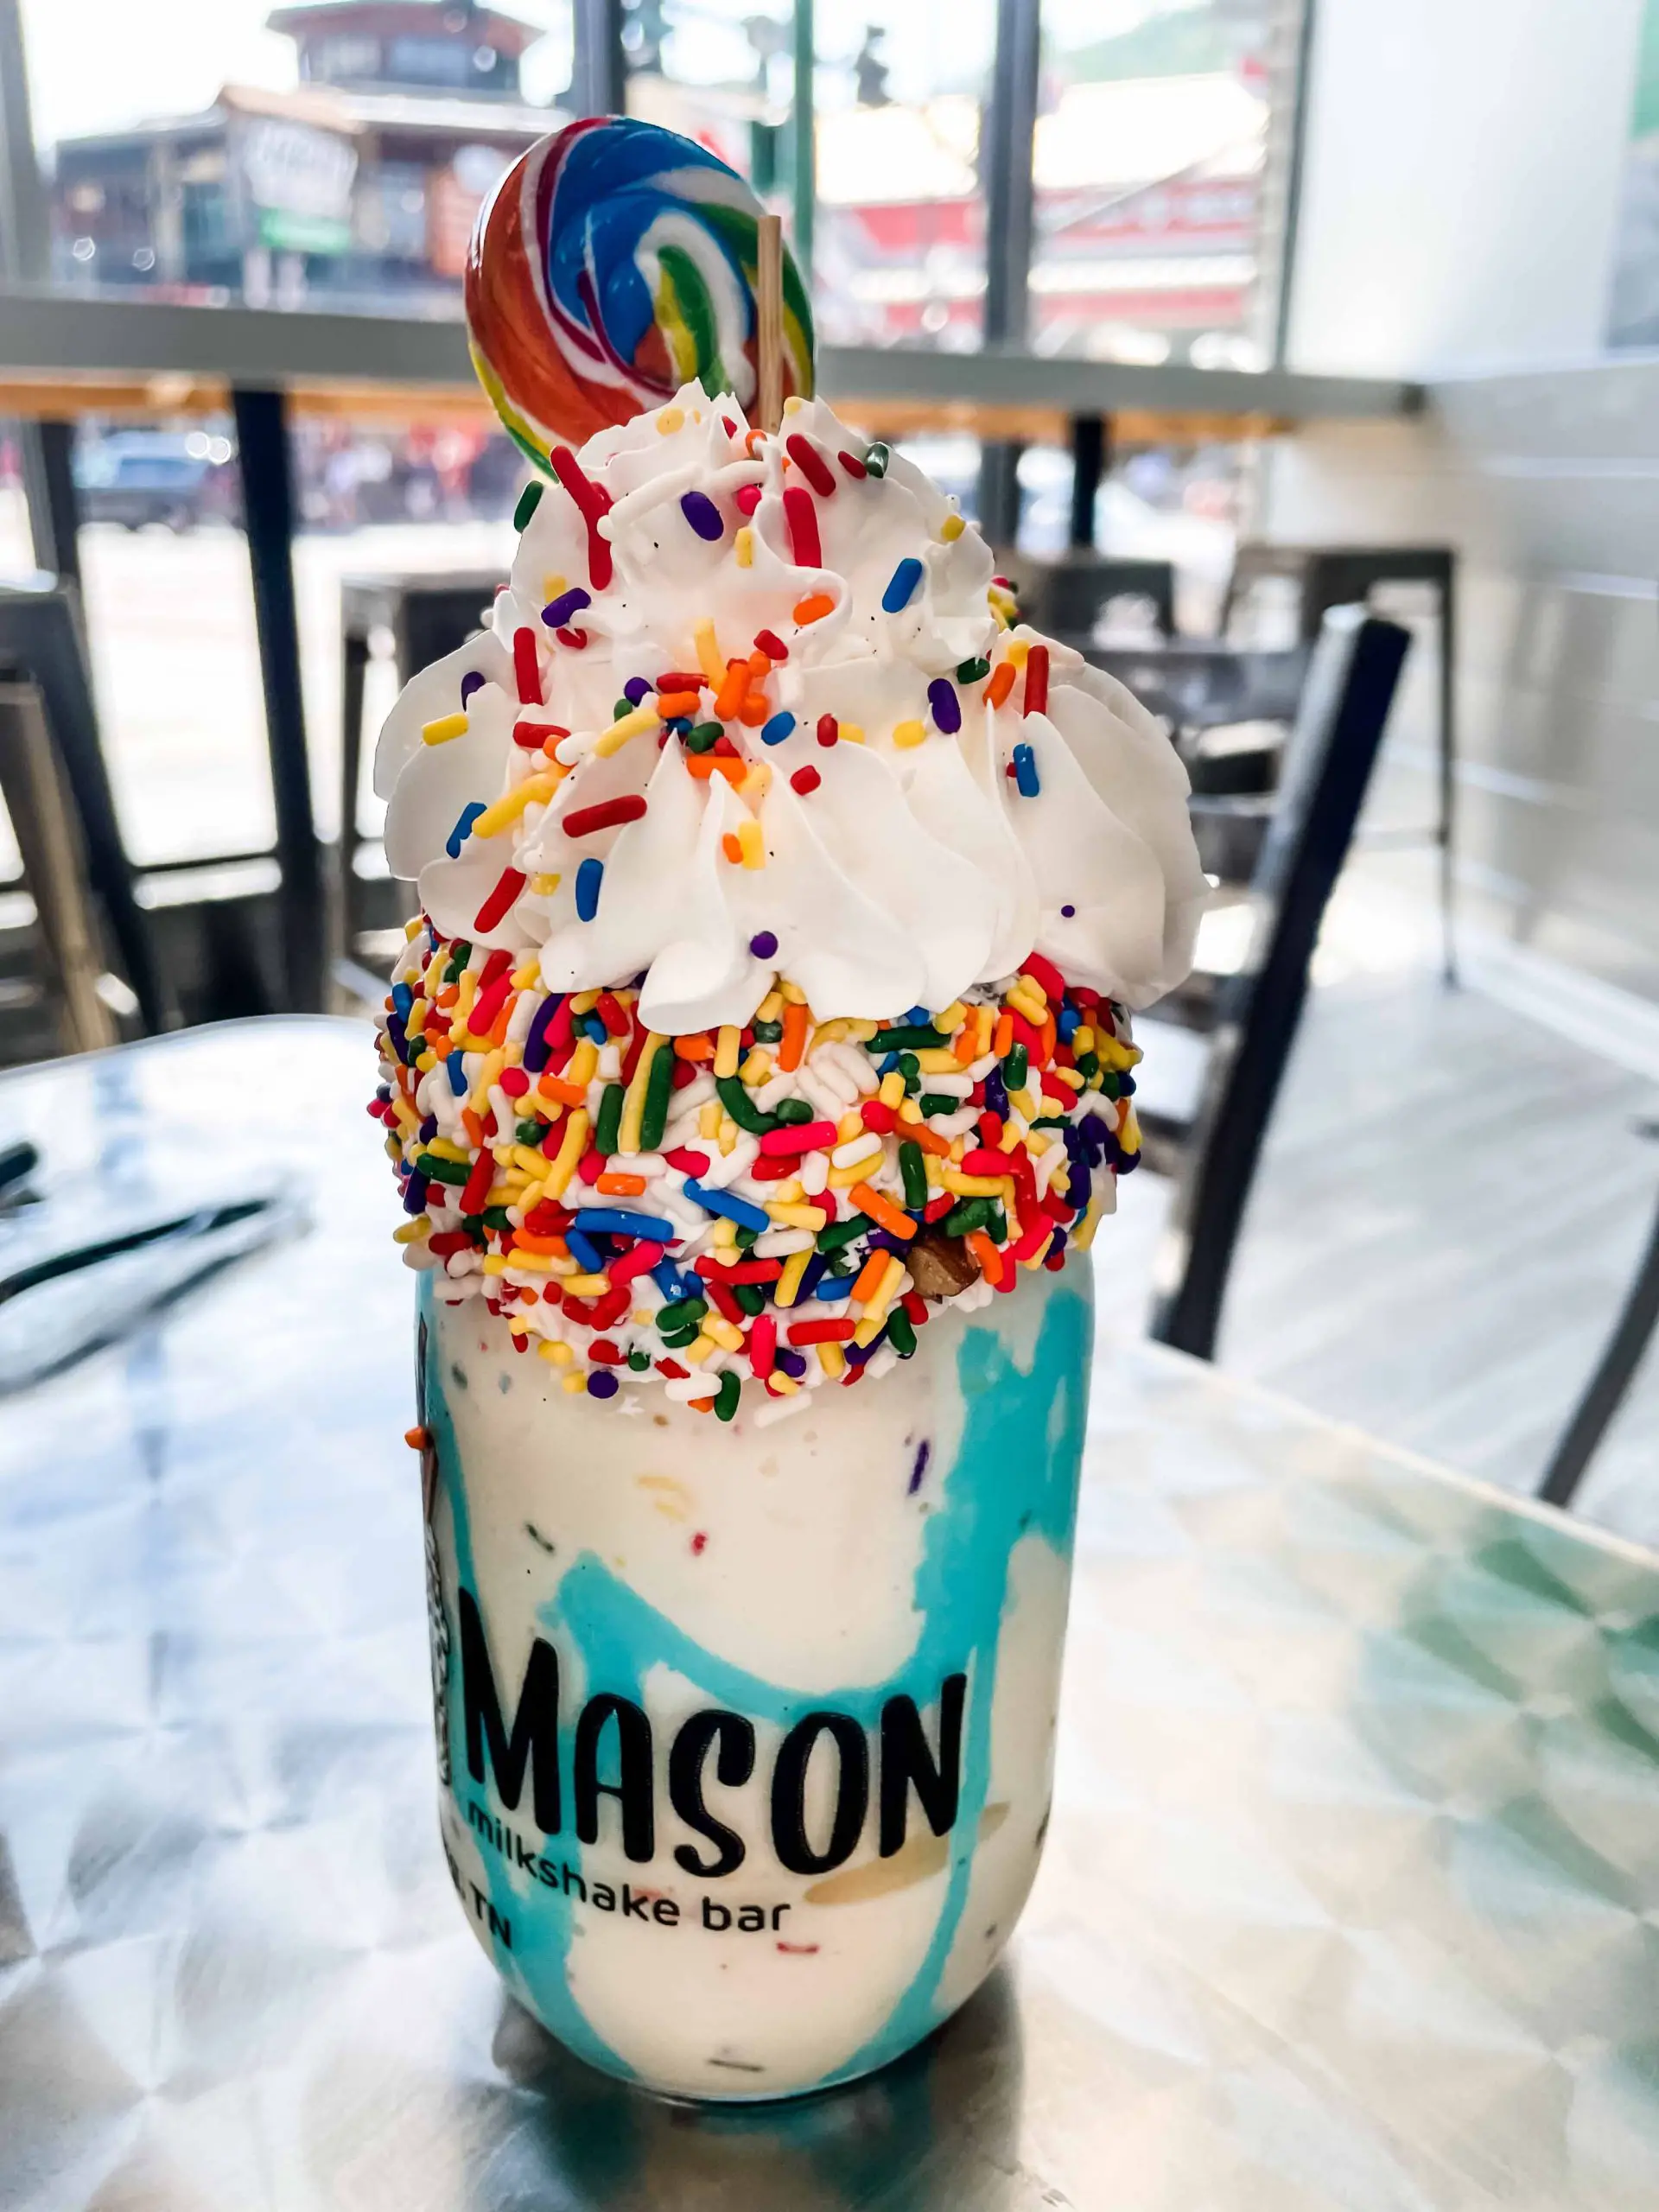 crazy mason milkshake bar in gatlinburg tn candy sprinkles